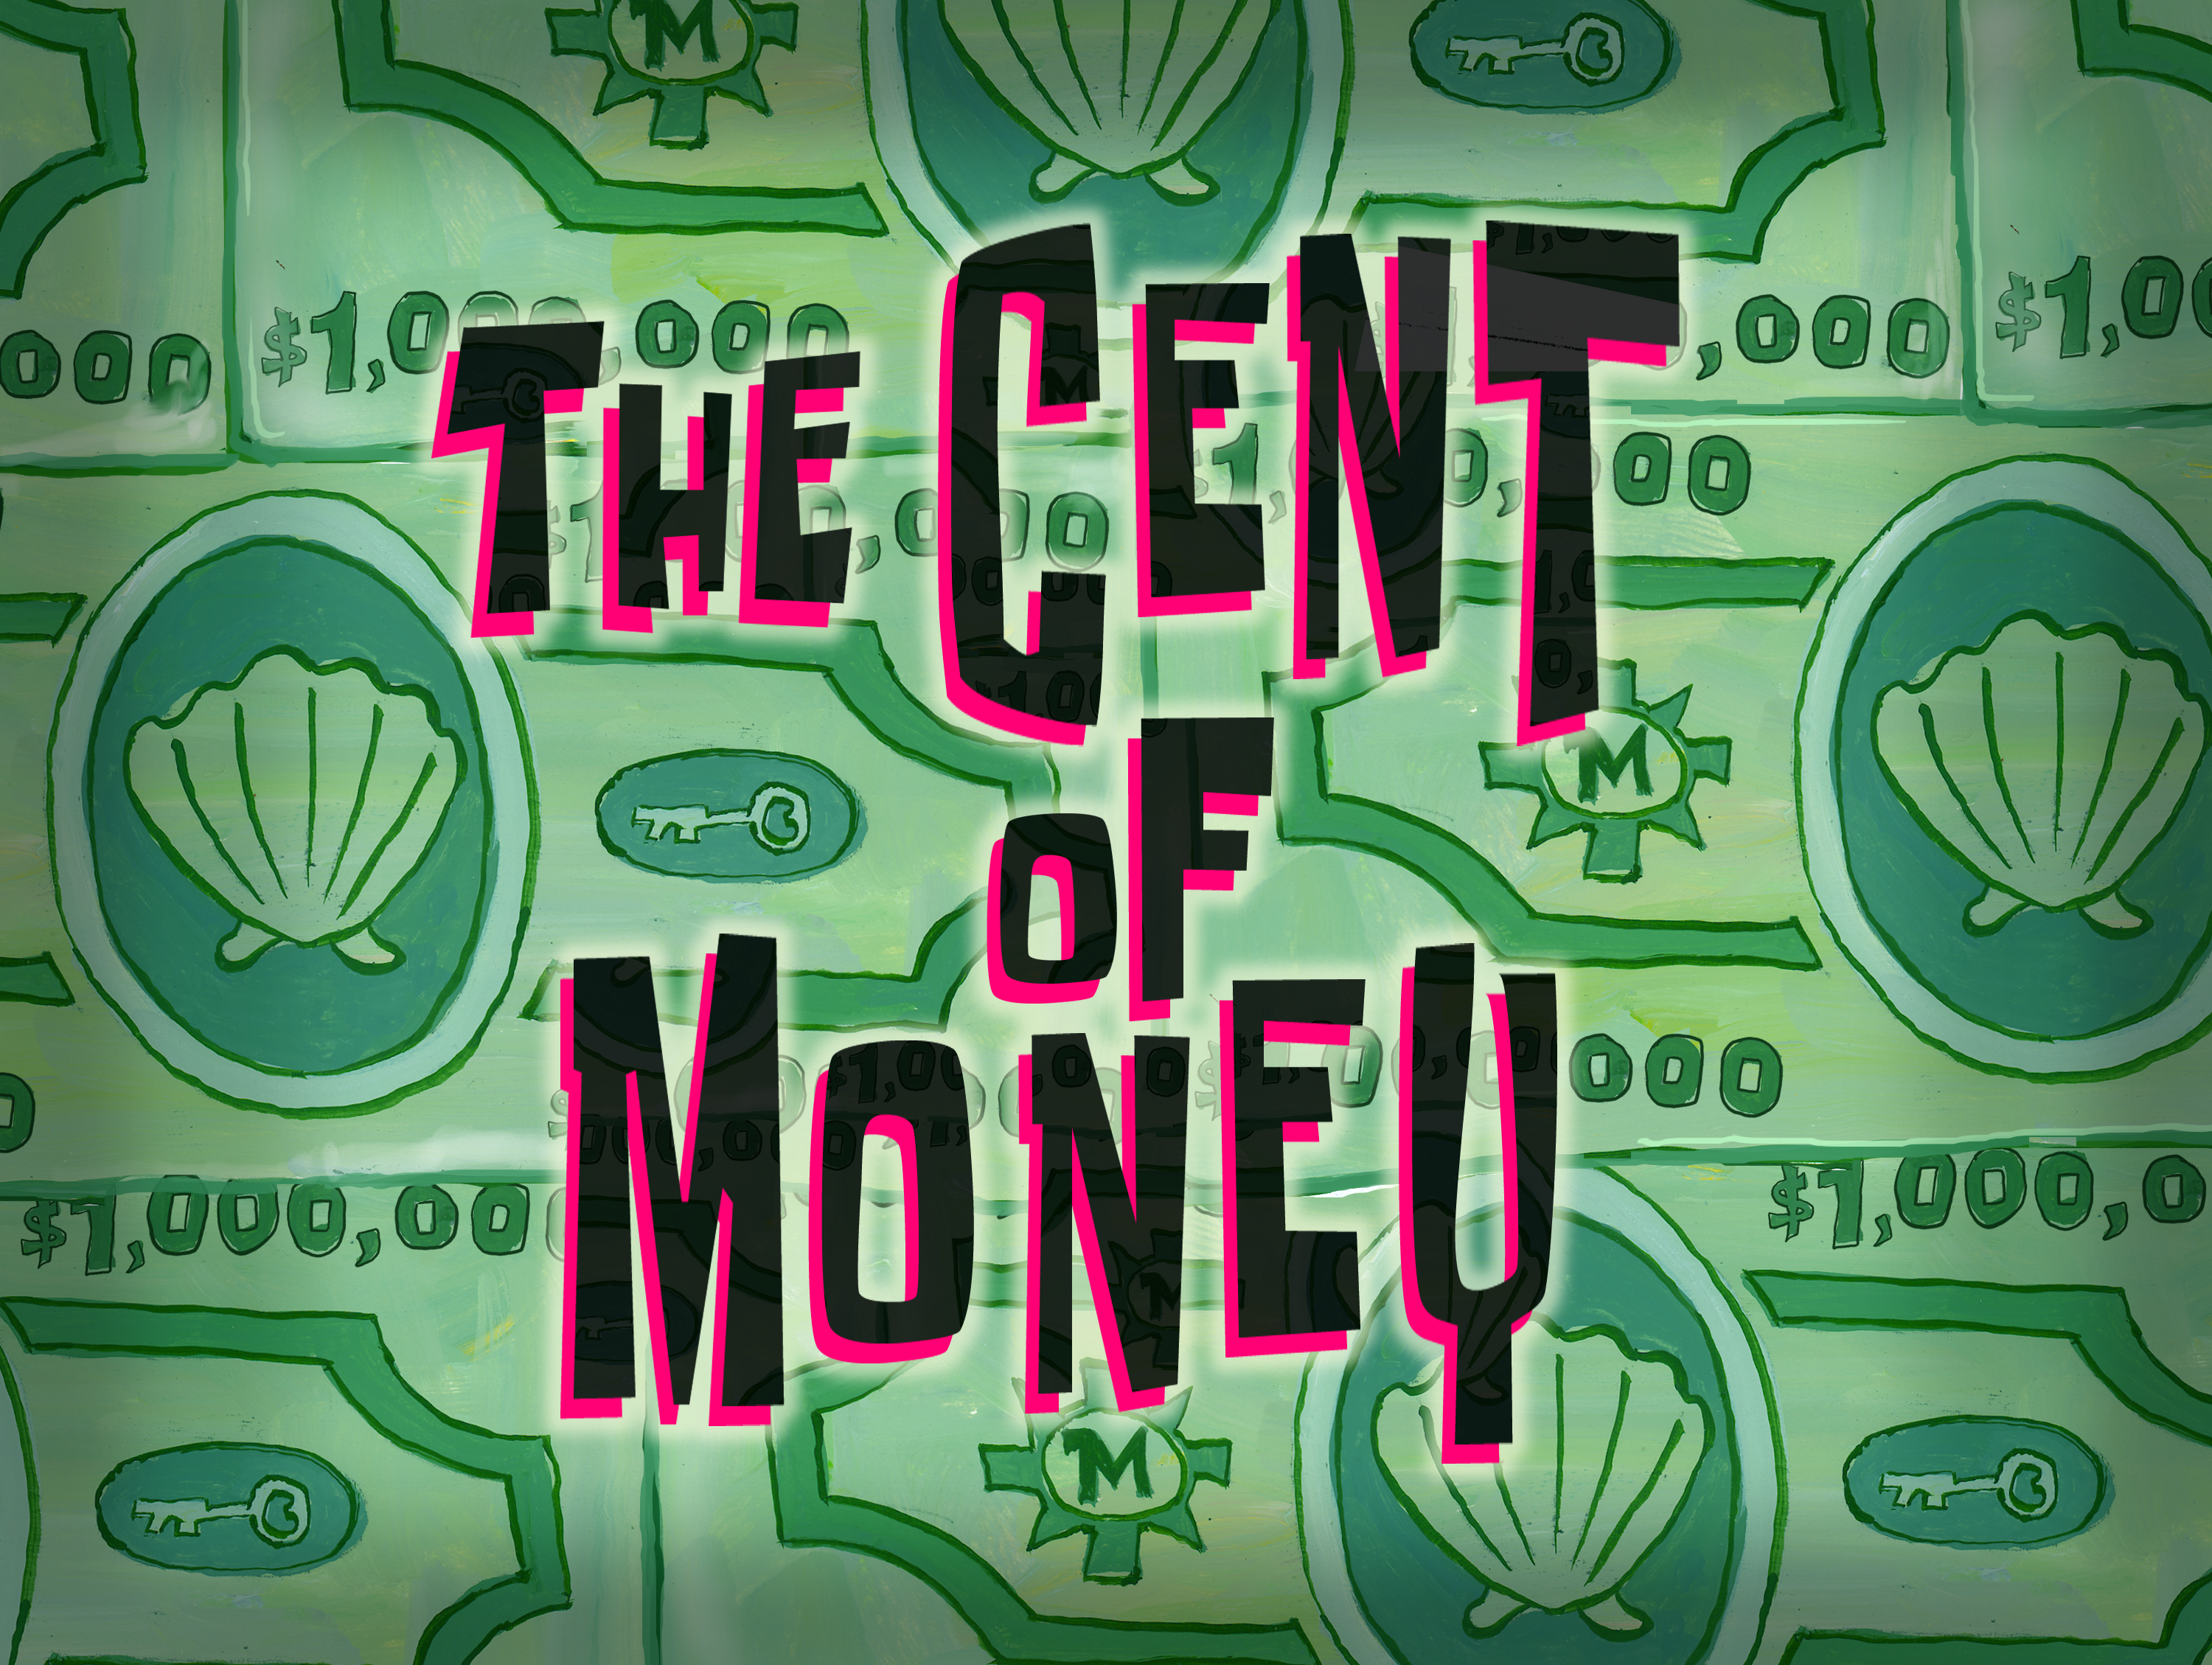 SpongeBob SquarePants - Money Drip, Standard Length